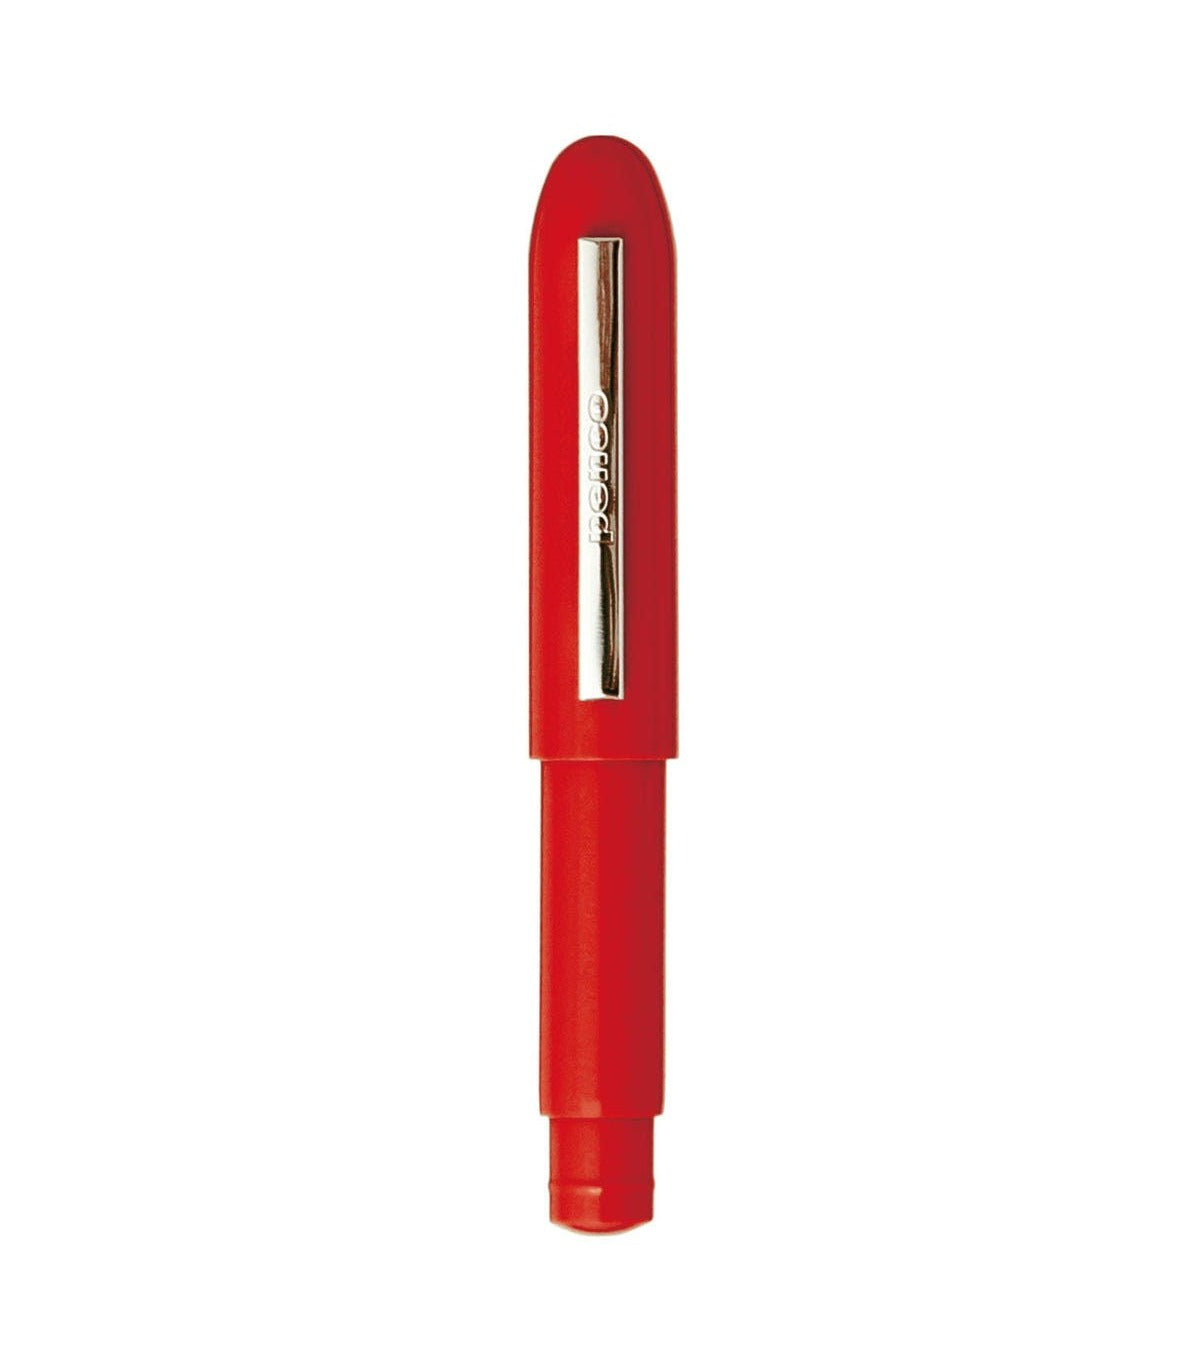 Penco Bullet Light Mechanical Pencil